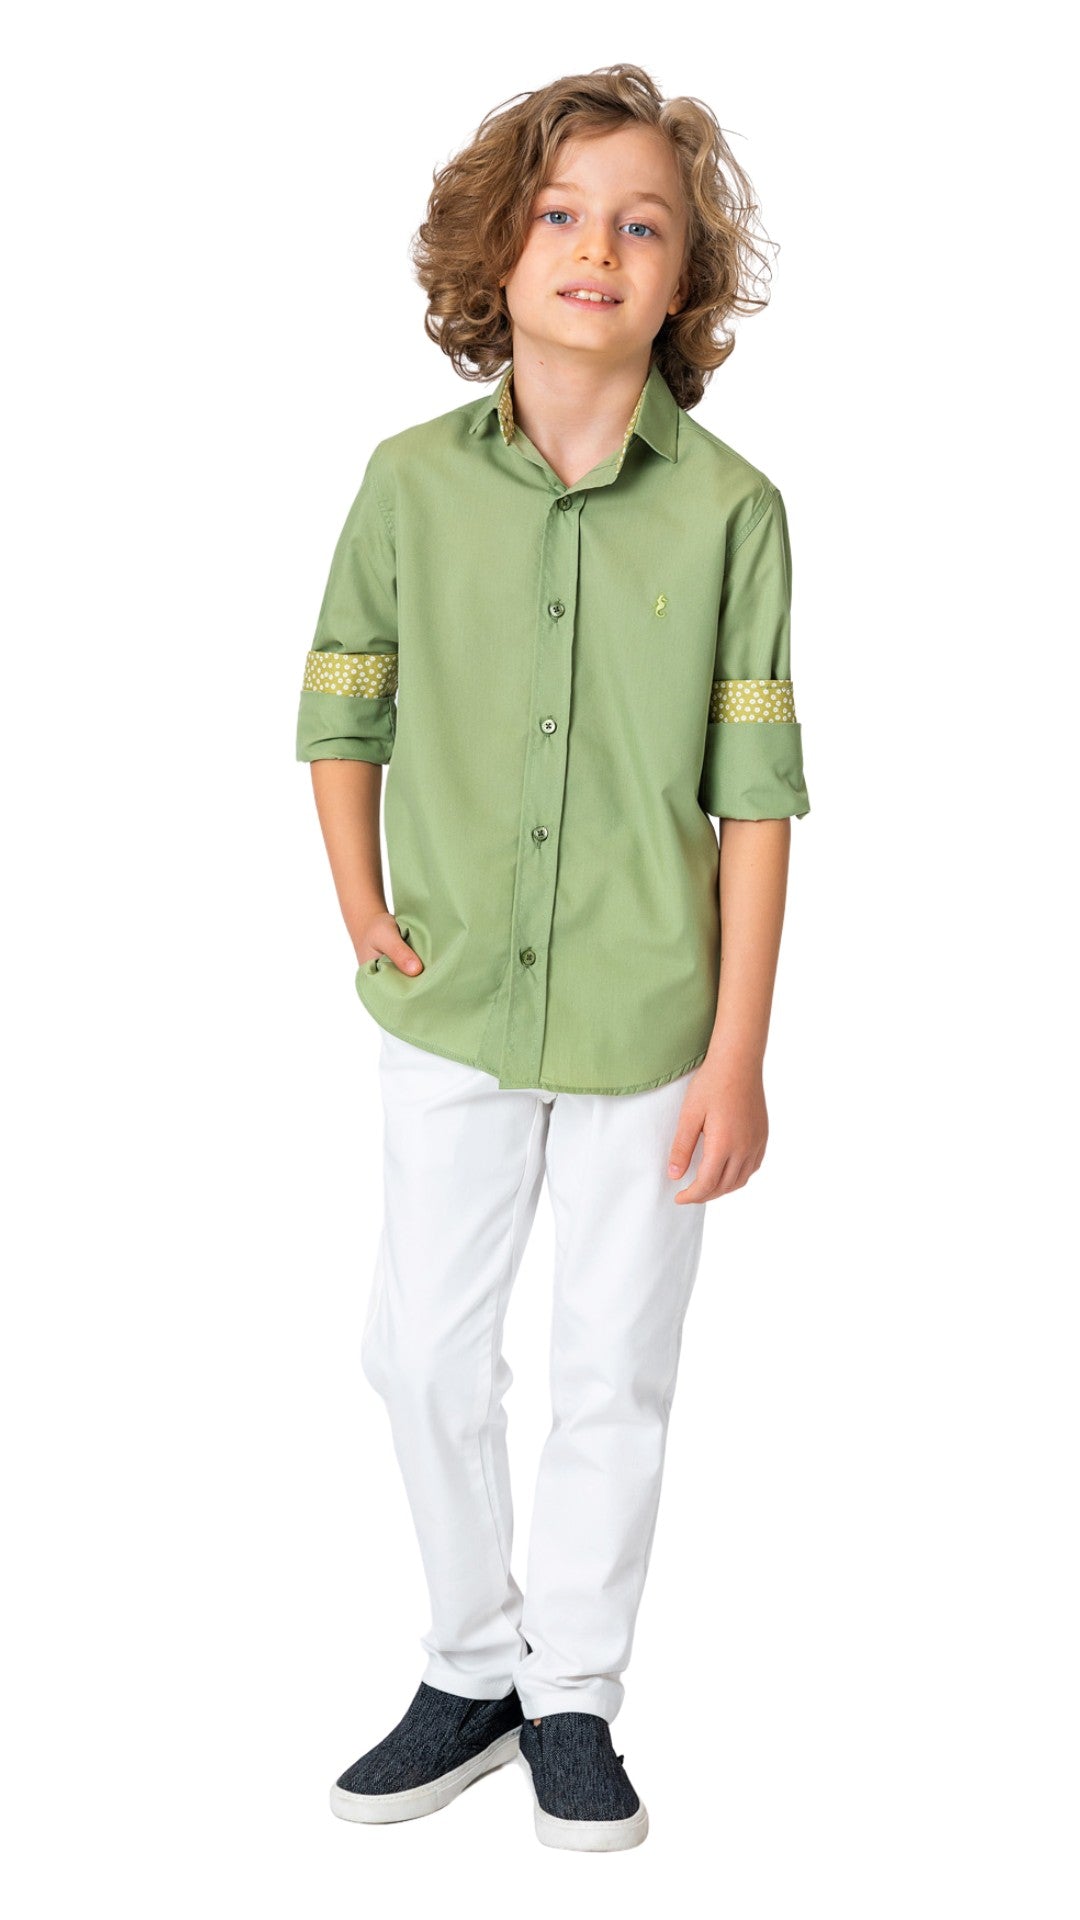 InCity Boys Tween 7-14 Years Long Sleeve Button-Down Fashion Rase Dress Shirt InCity Boys Girls